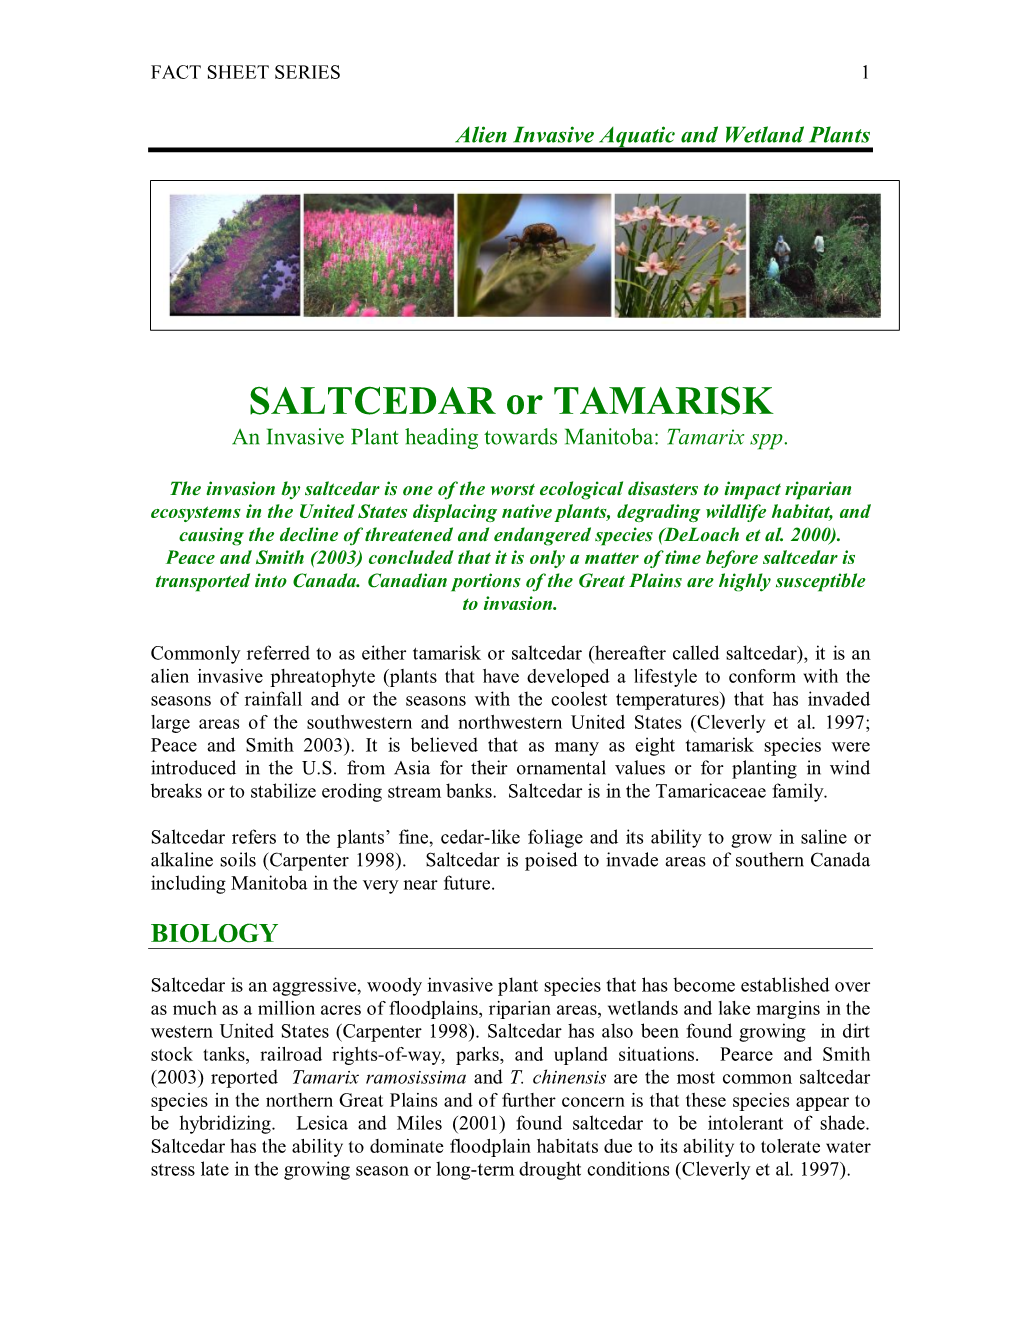 SALTCEDAR Or TAMARISK an Invasive Plant Heading Towards Manitoba: Tamarix Spp